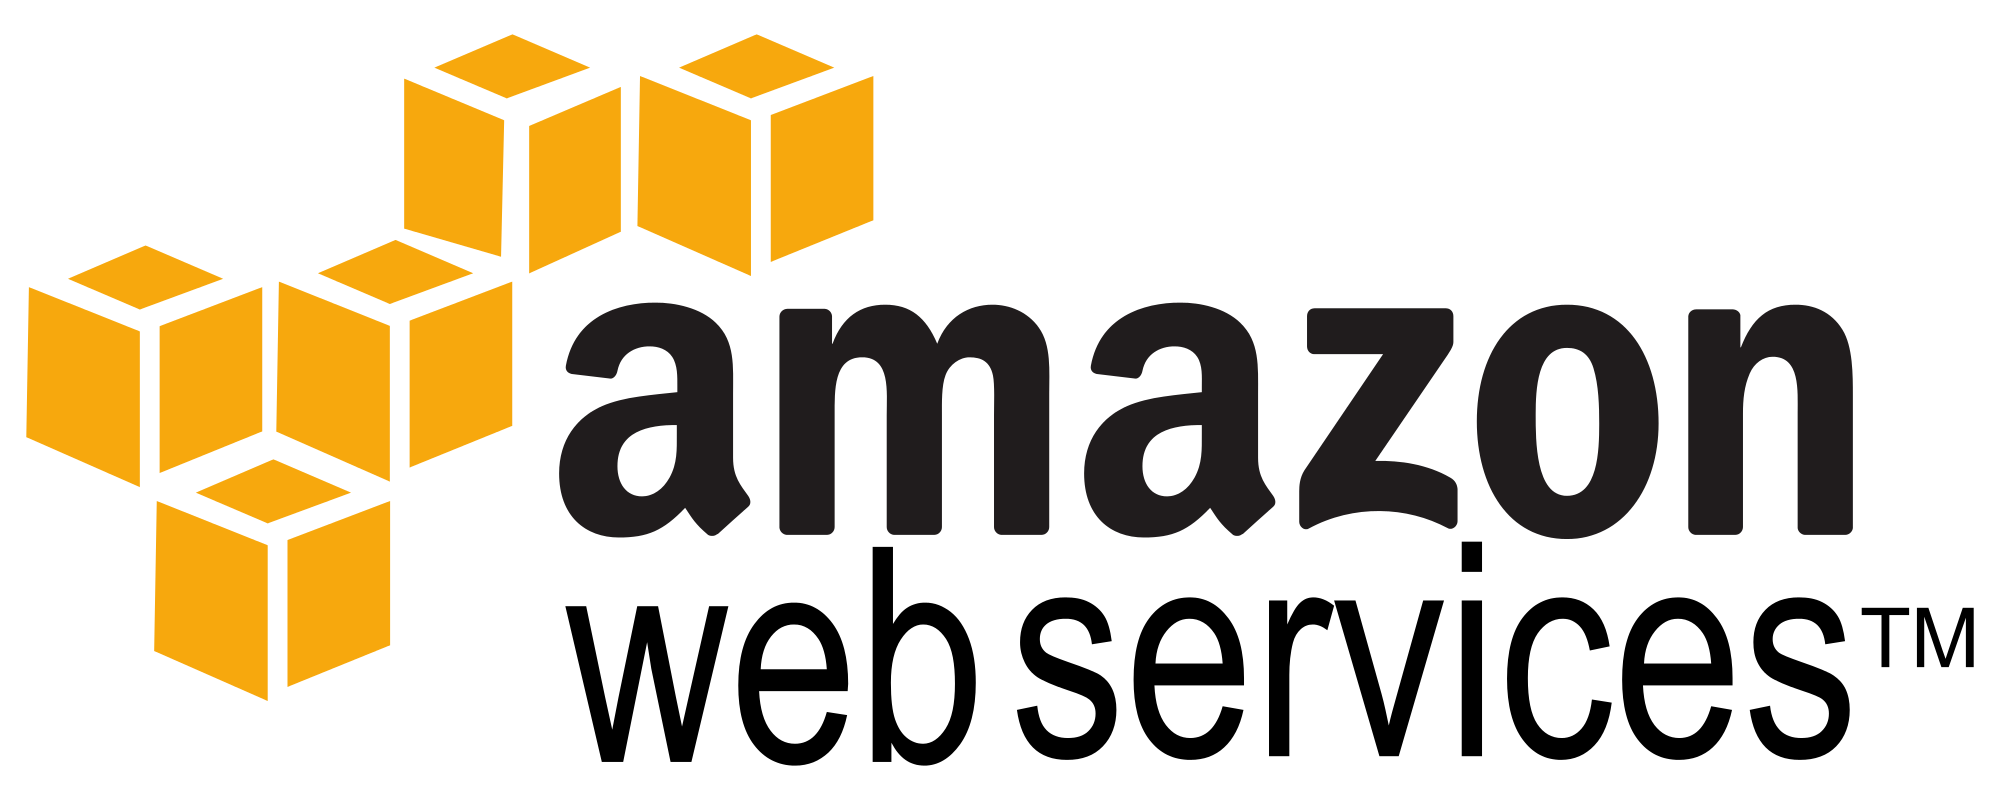 AmazonWebservices_Logo.svg